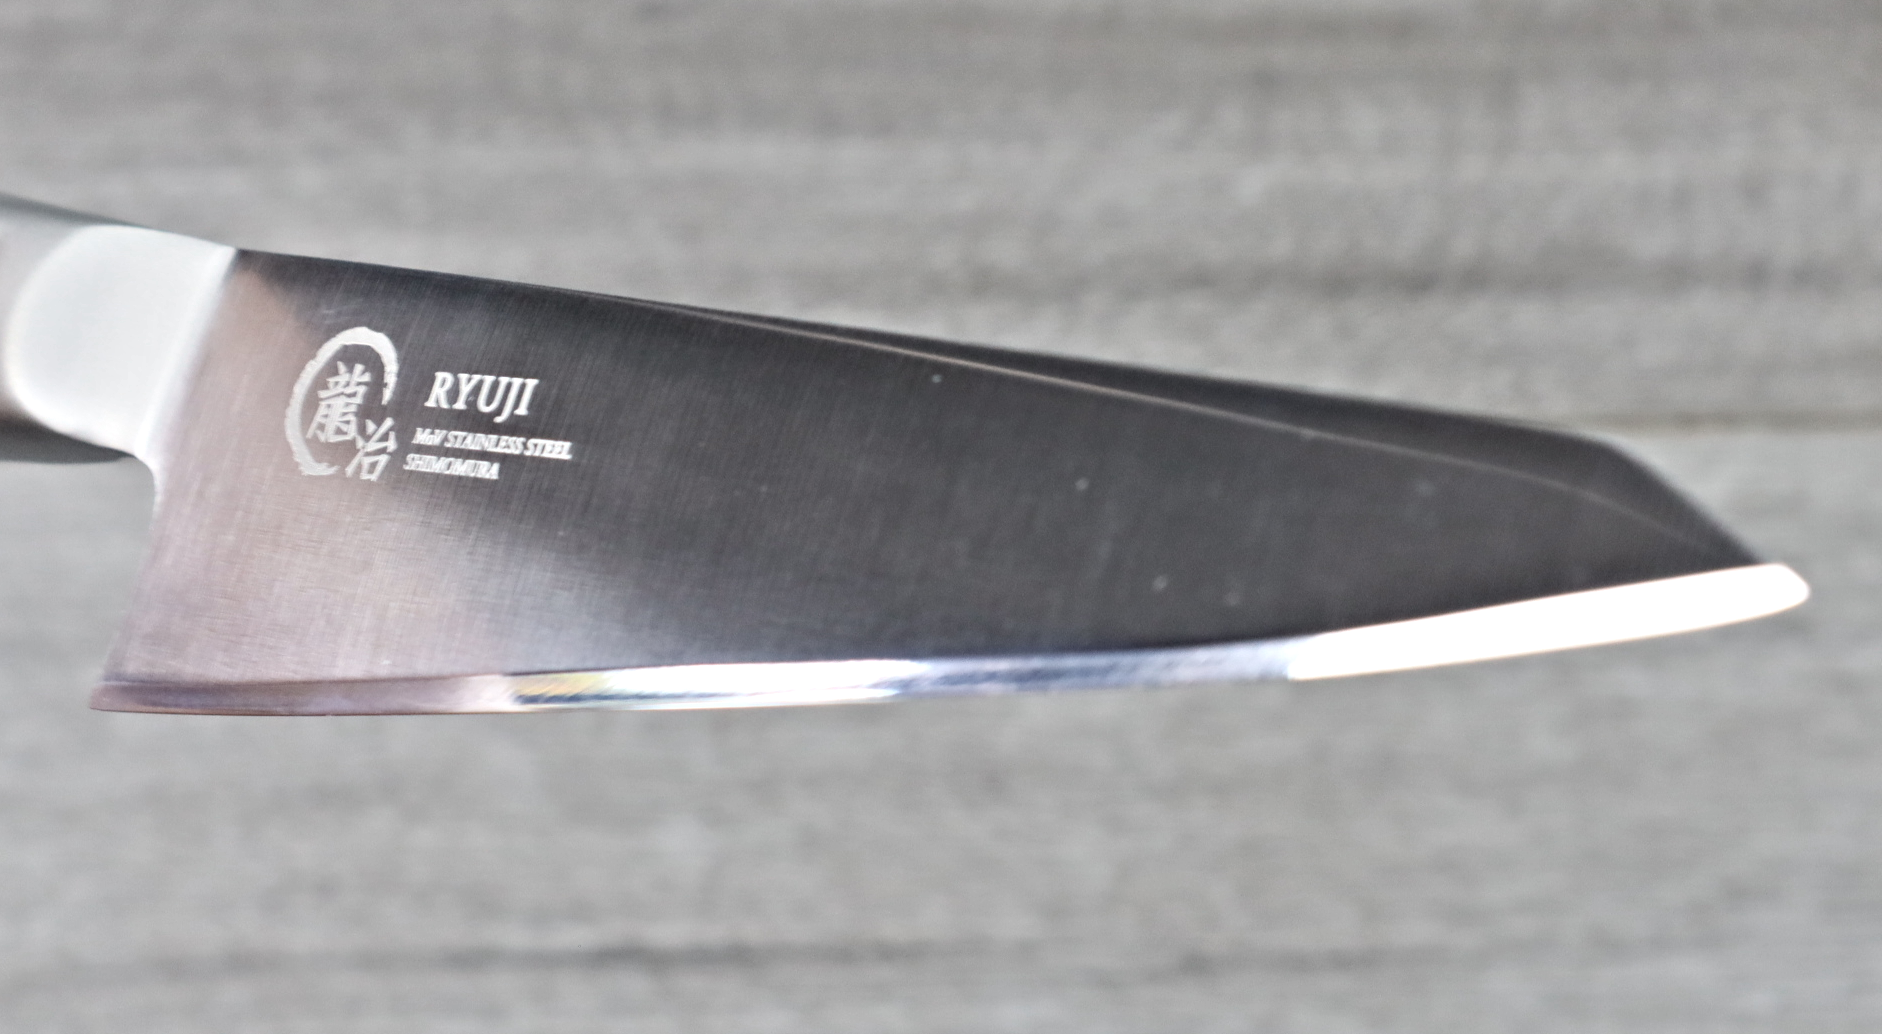 Ryuji All Stainless-Steel Honesuki (Boning/Utility) Knife 150mm